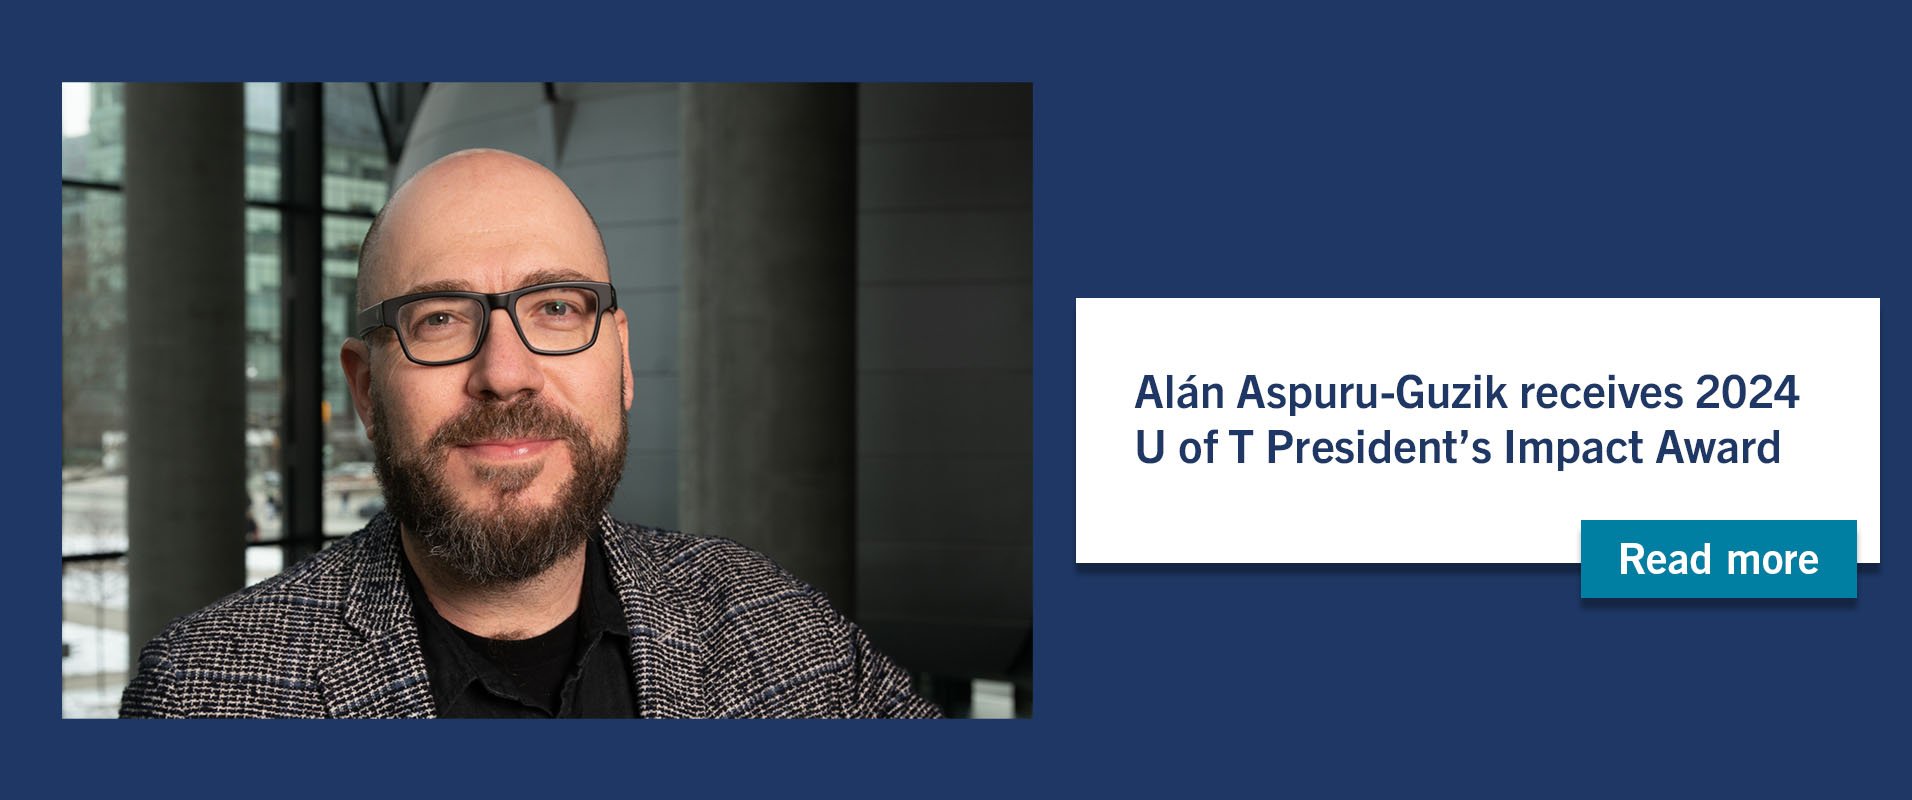 Alán Aspuru-Guzik receives 2024 U of T President’s Impact Award